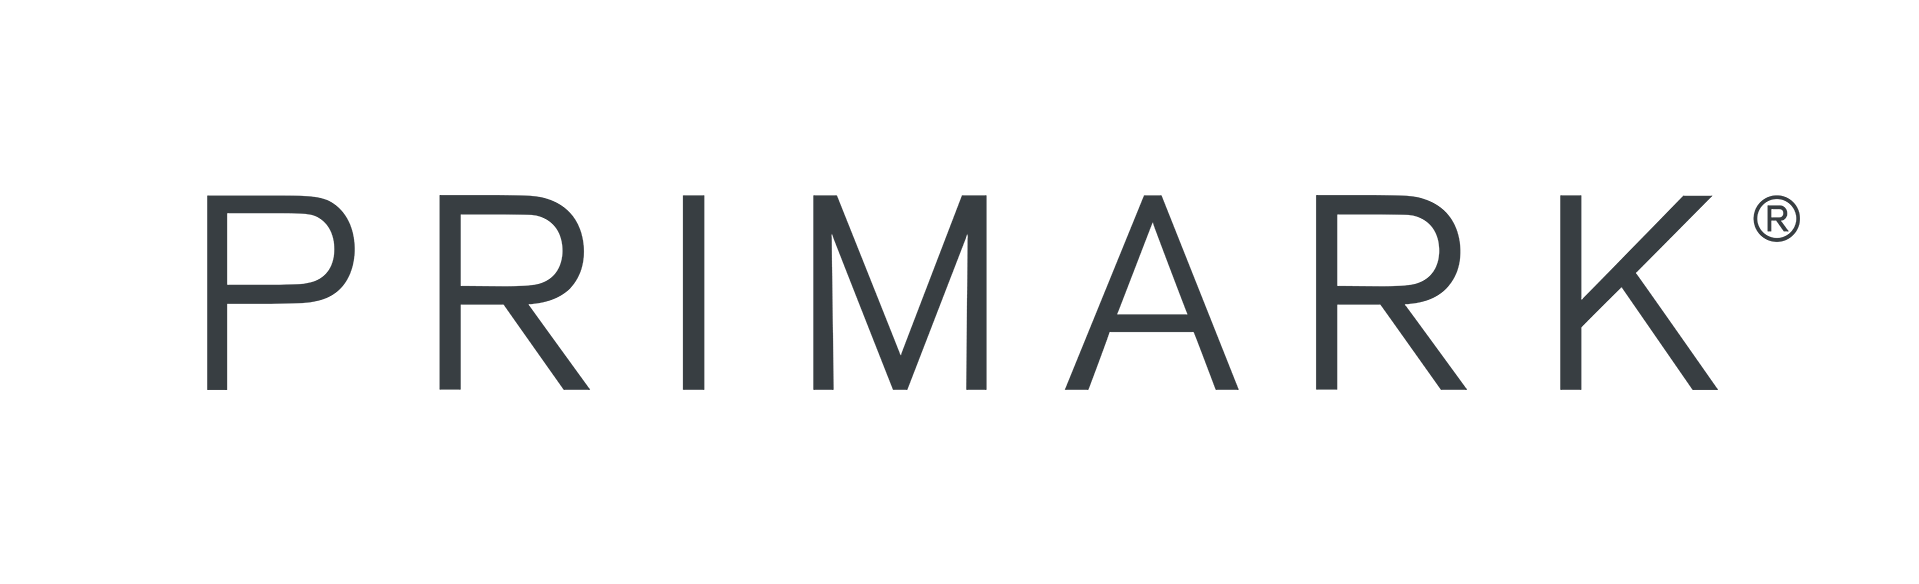 Primark Cares Logo Grey